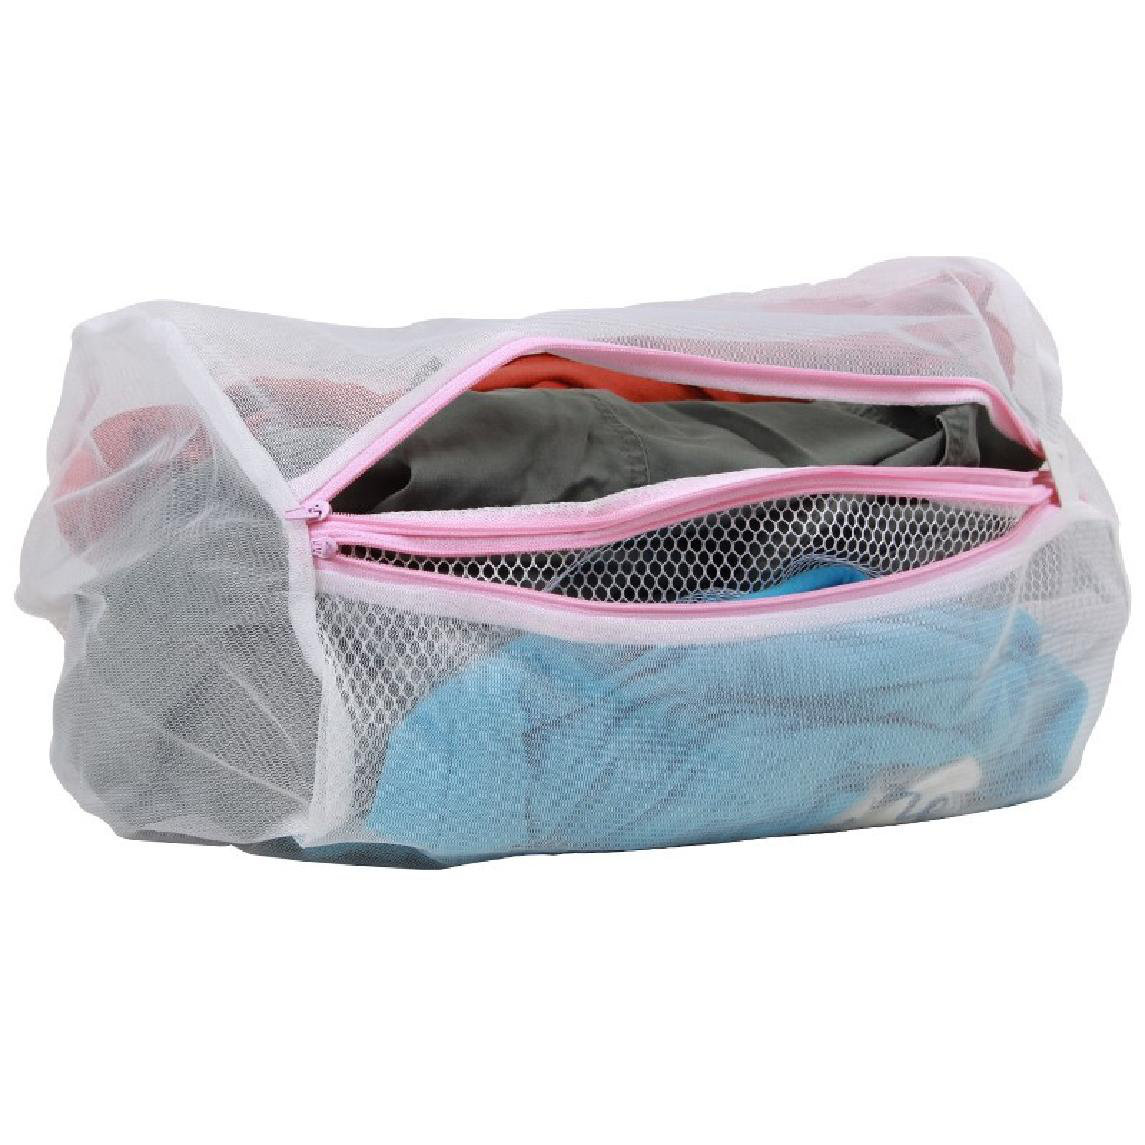 Rebrilliant Compartmentalized Layered Net Laundry Bag Anti